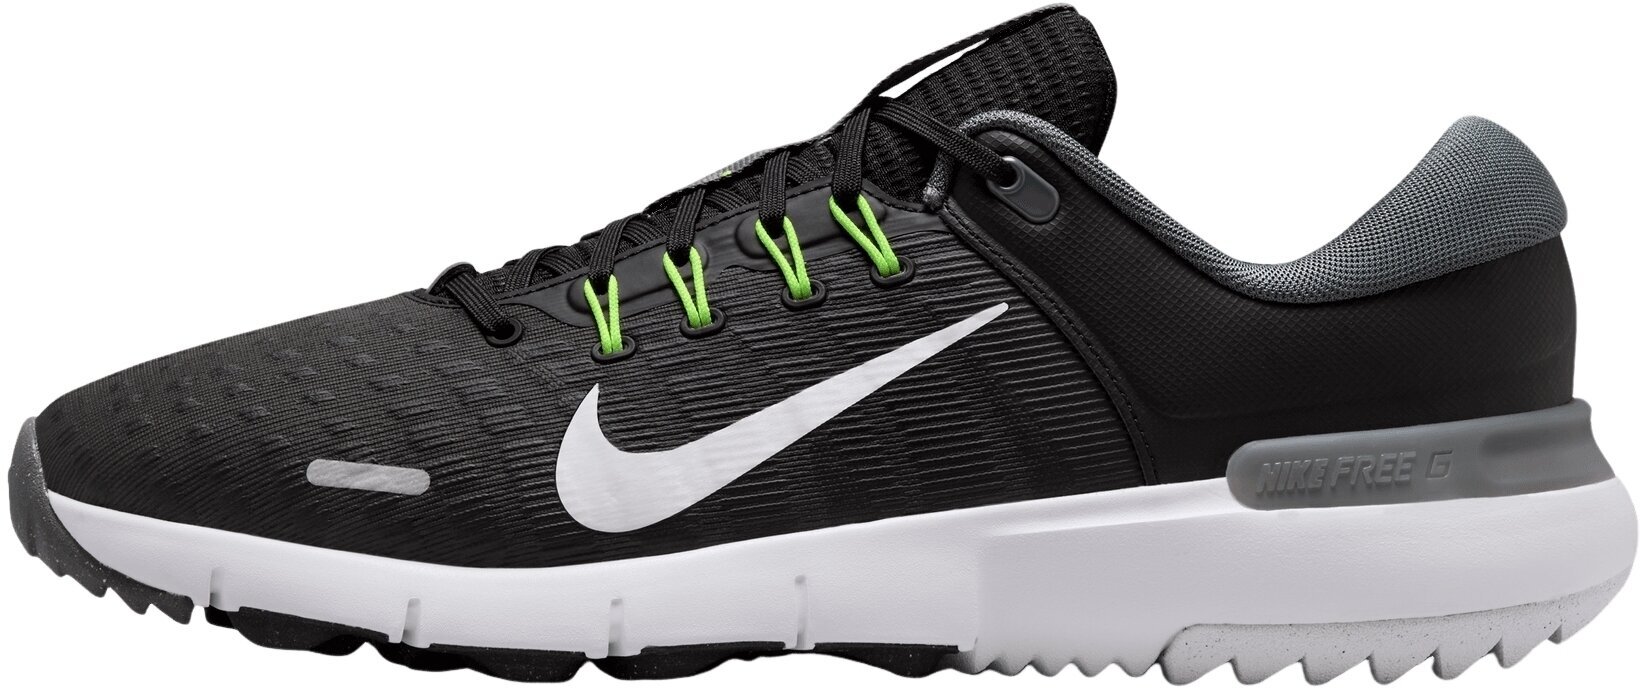 Men's golf shoes Nike Free Golf Unisex Shoes Black/White/Iron Grey/Volt 44